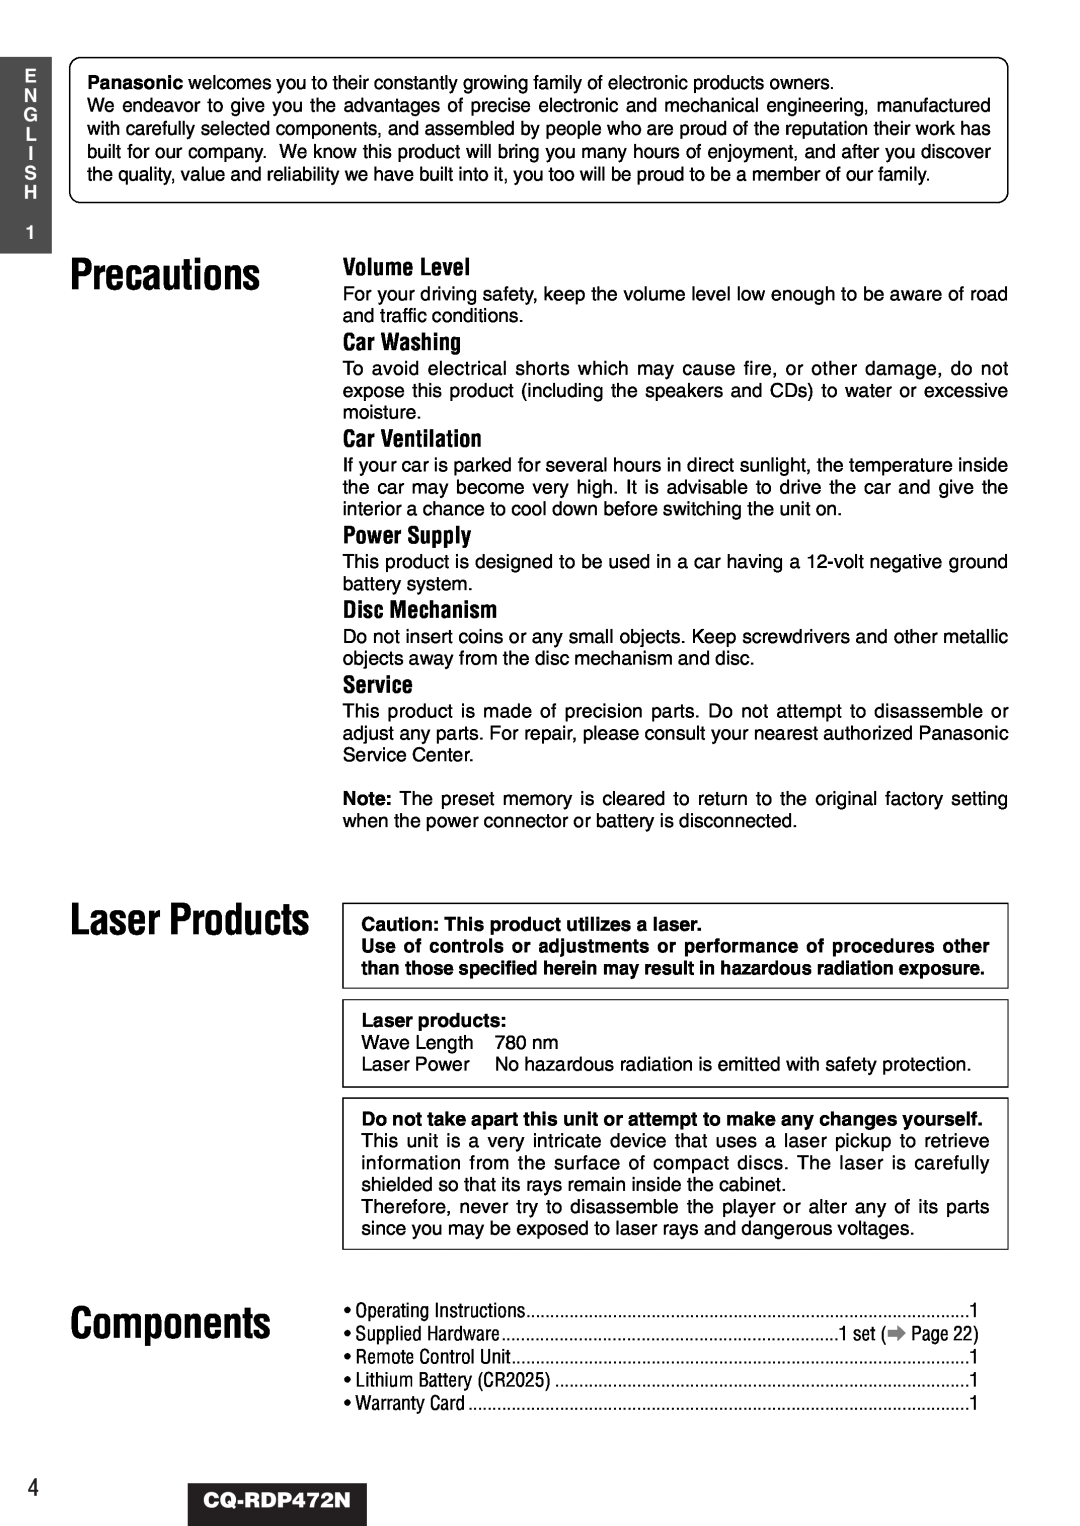 Panasonic CQ-RDP472N Precautions, Components, Laser Products, Volume Level, Car Washing, Car Ventilation, Power Supply 